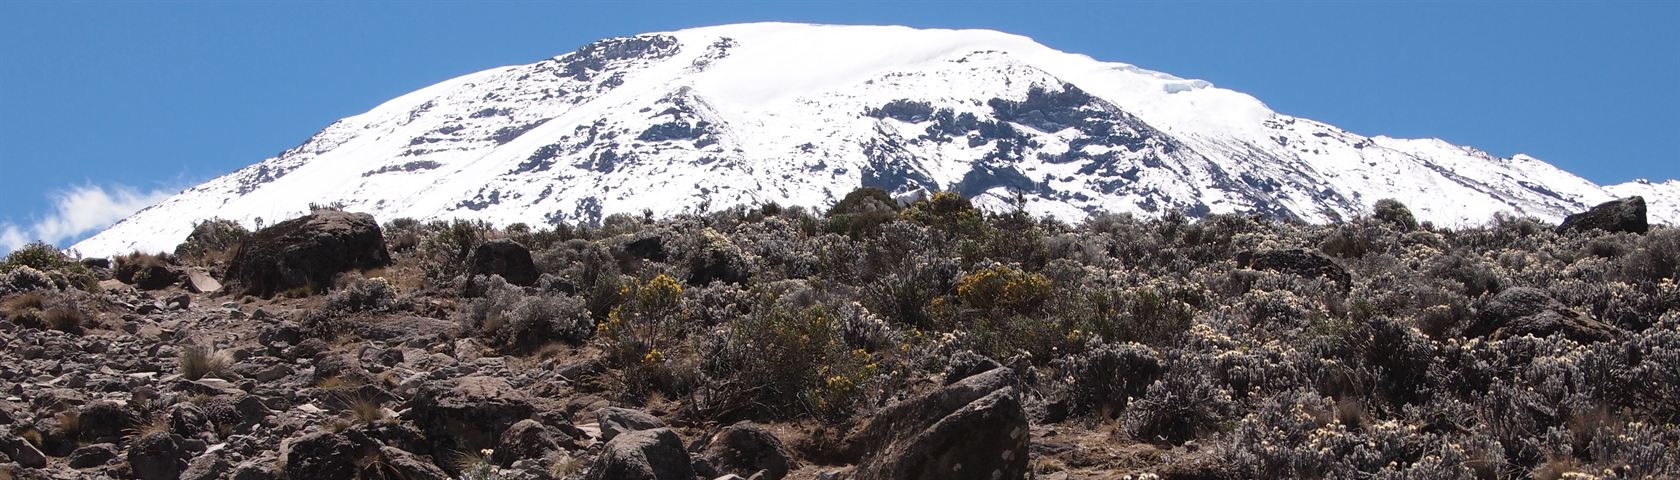 Snow covered Kilimanjaro